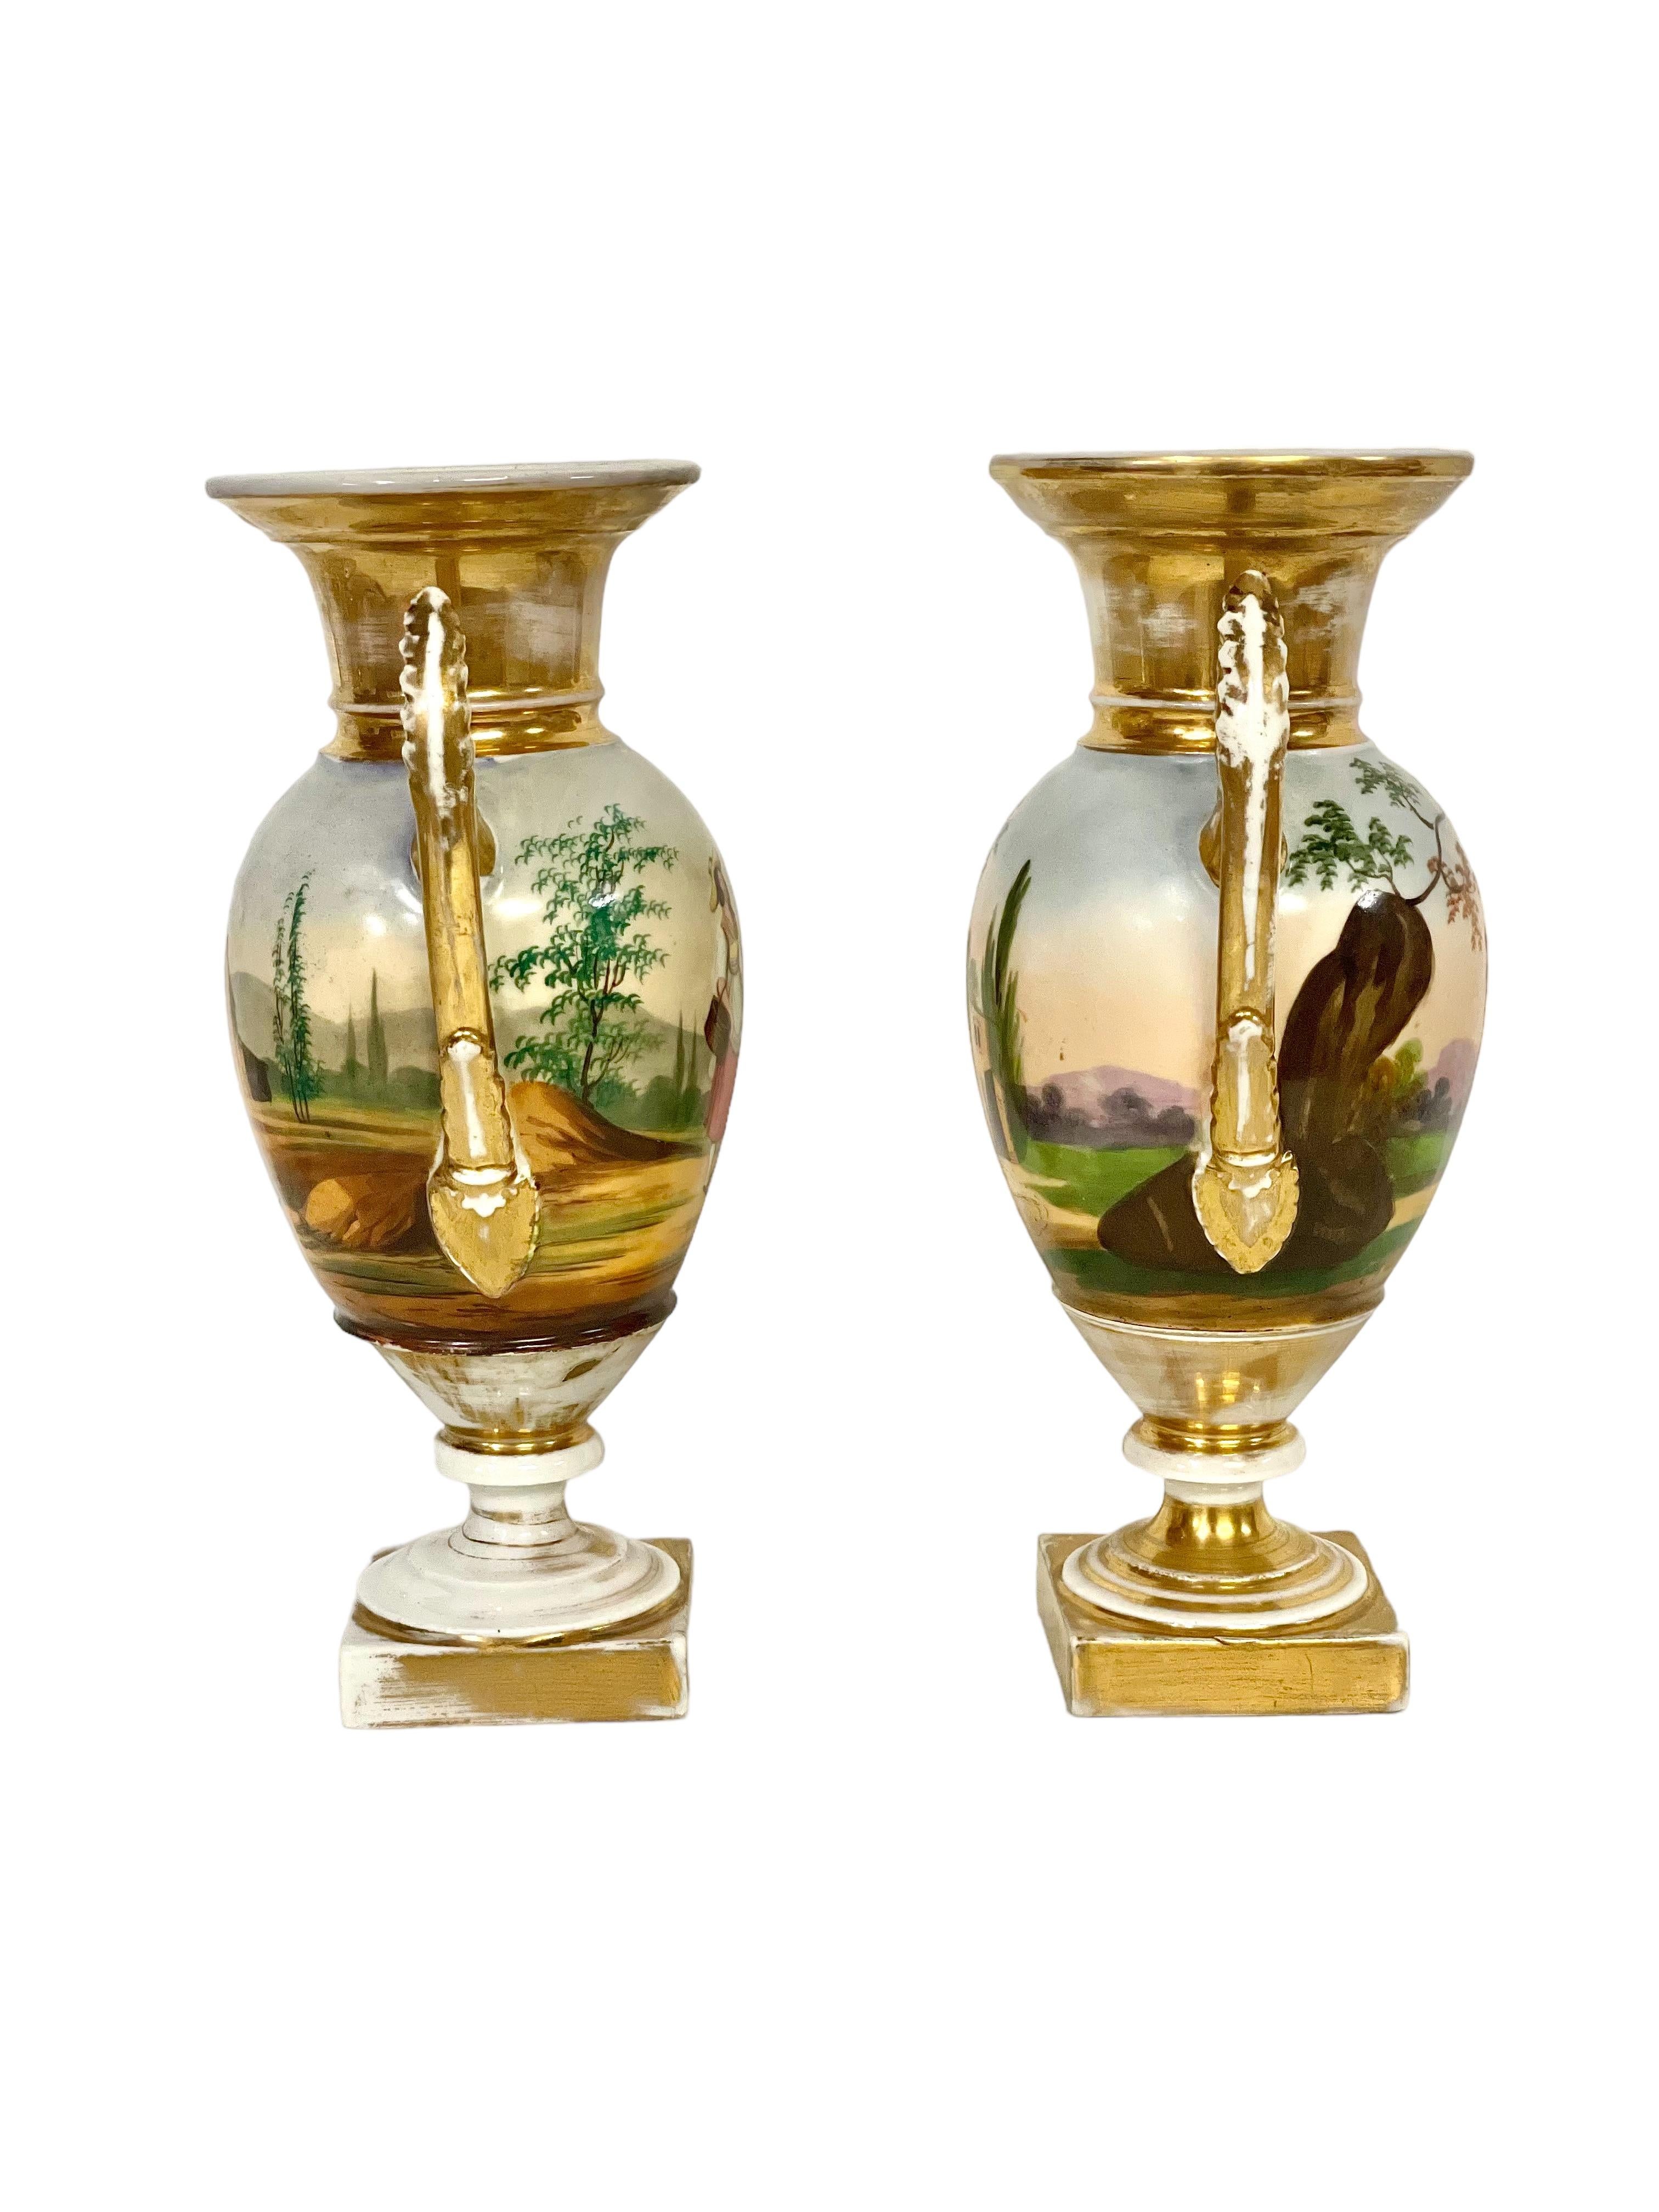 19th Century Pair of Hand-Painted Paris Porcelain Urns  For Sale 2